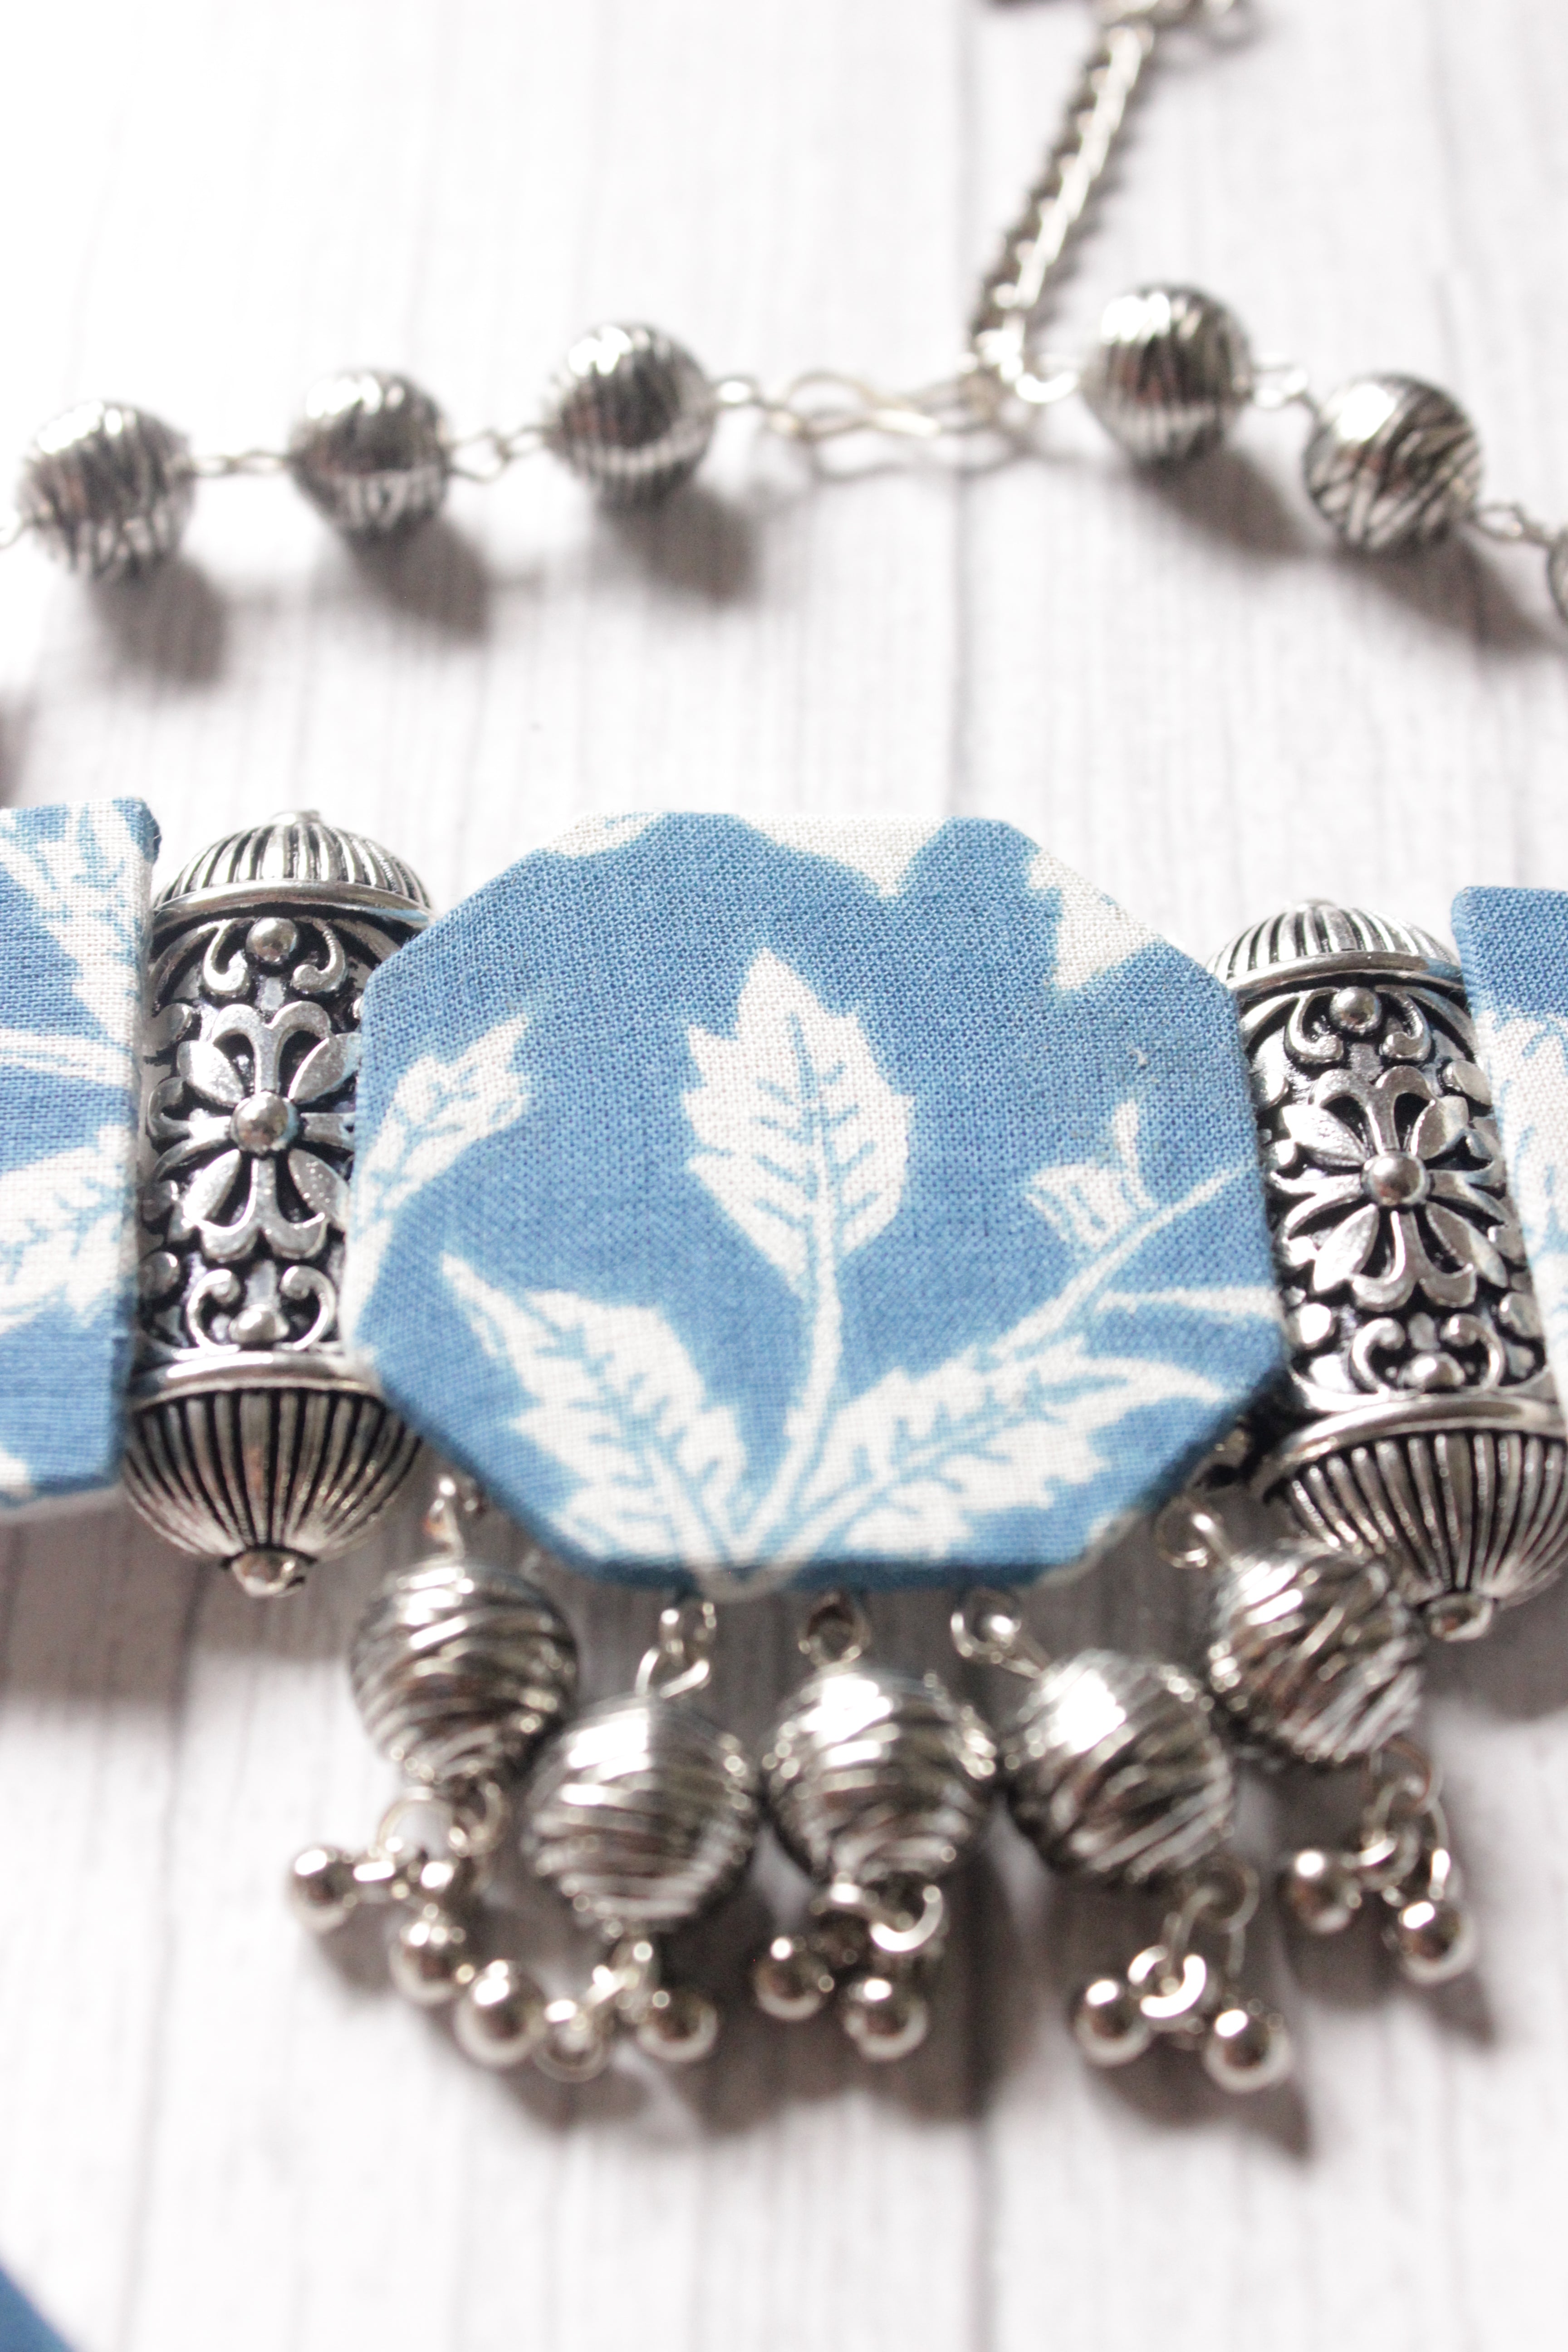 Printed Indigo Fabric Handmade Ball Chain Choker Necklace Set